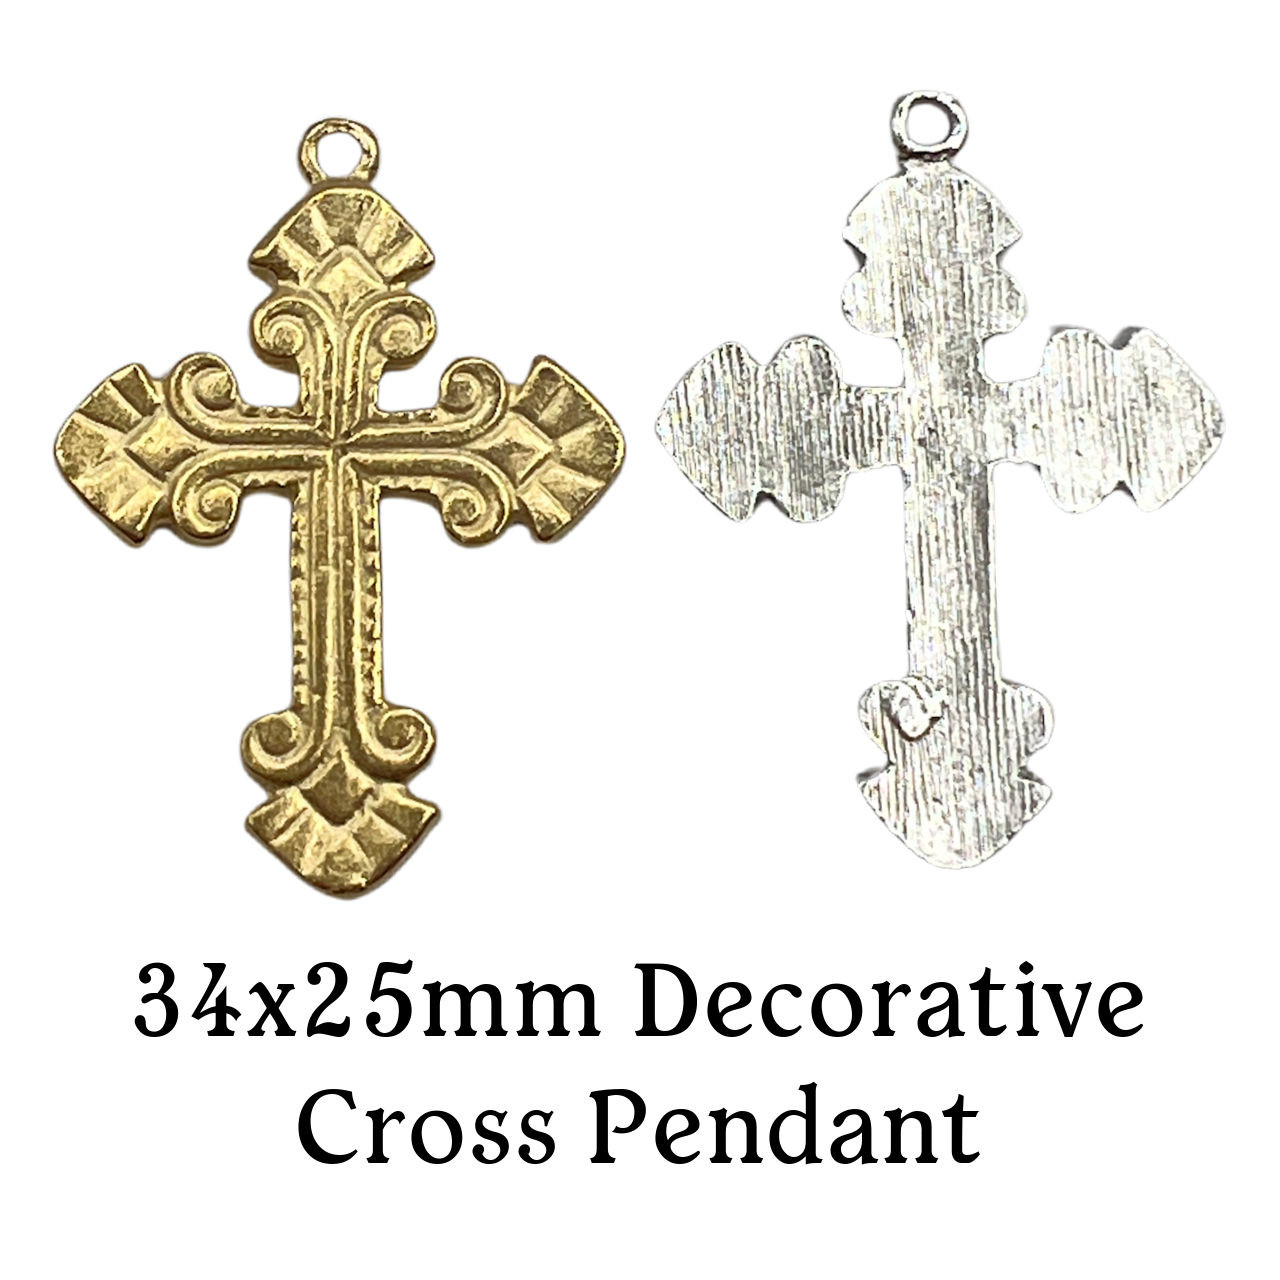 34x25mm Decorative Cross Pendant